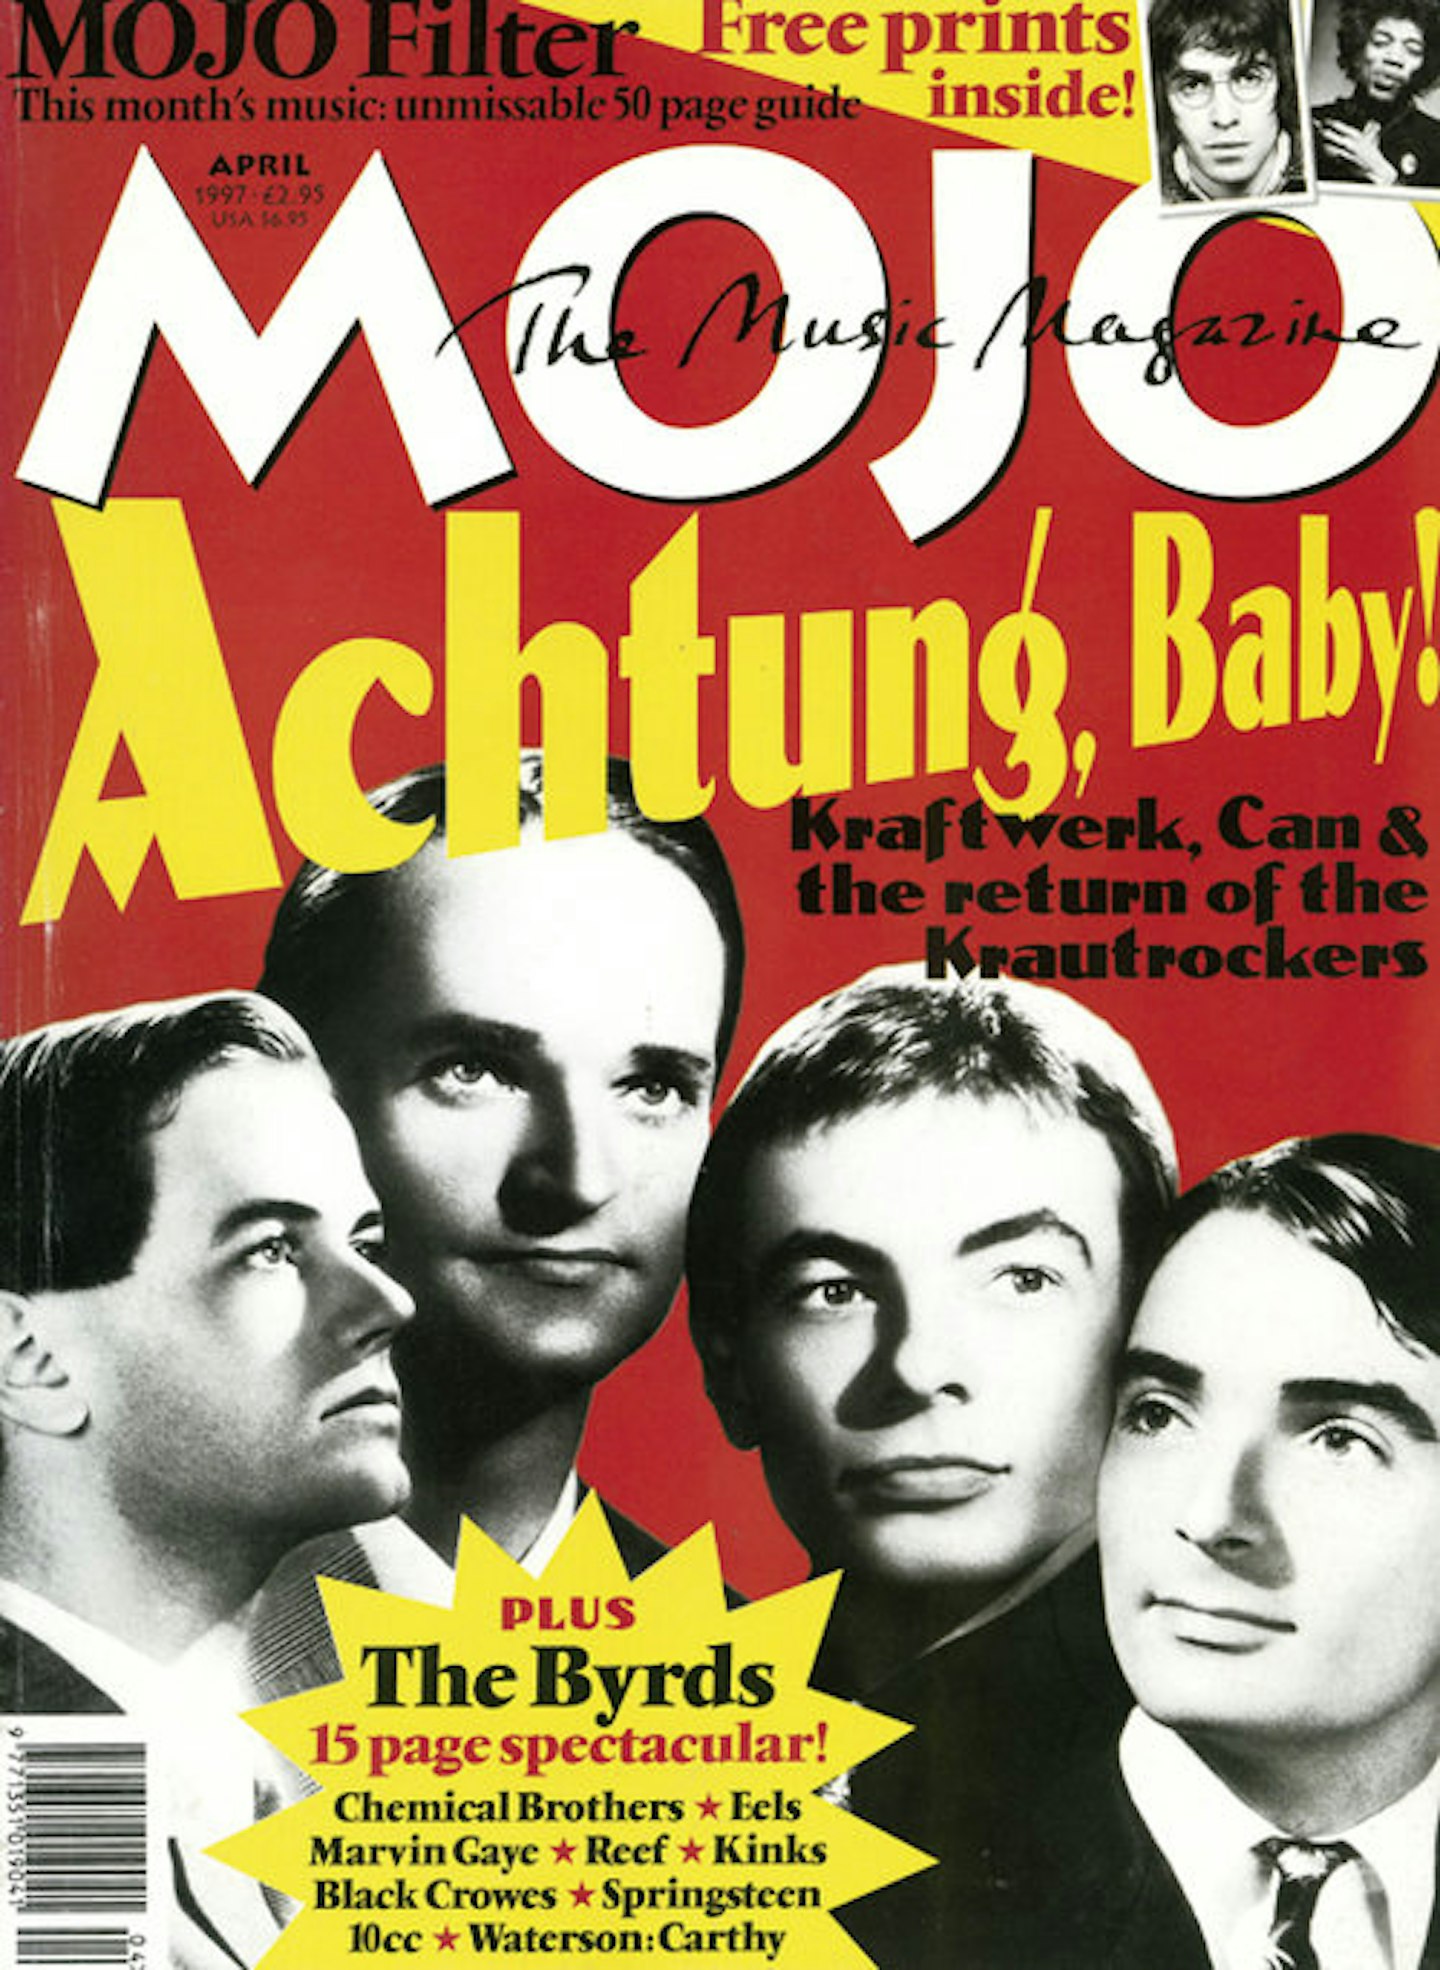 MOJO Issue 41 / April 1997